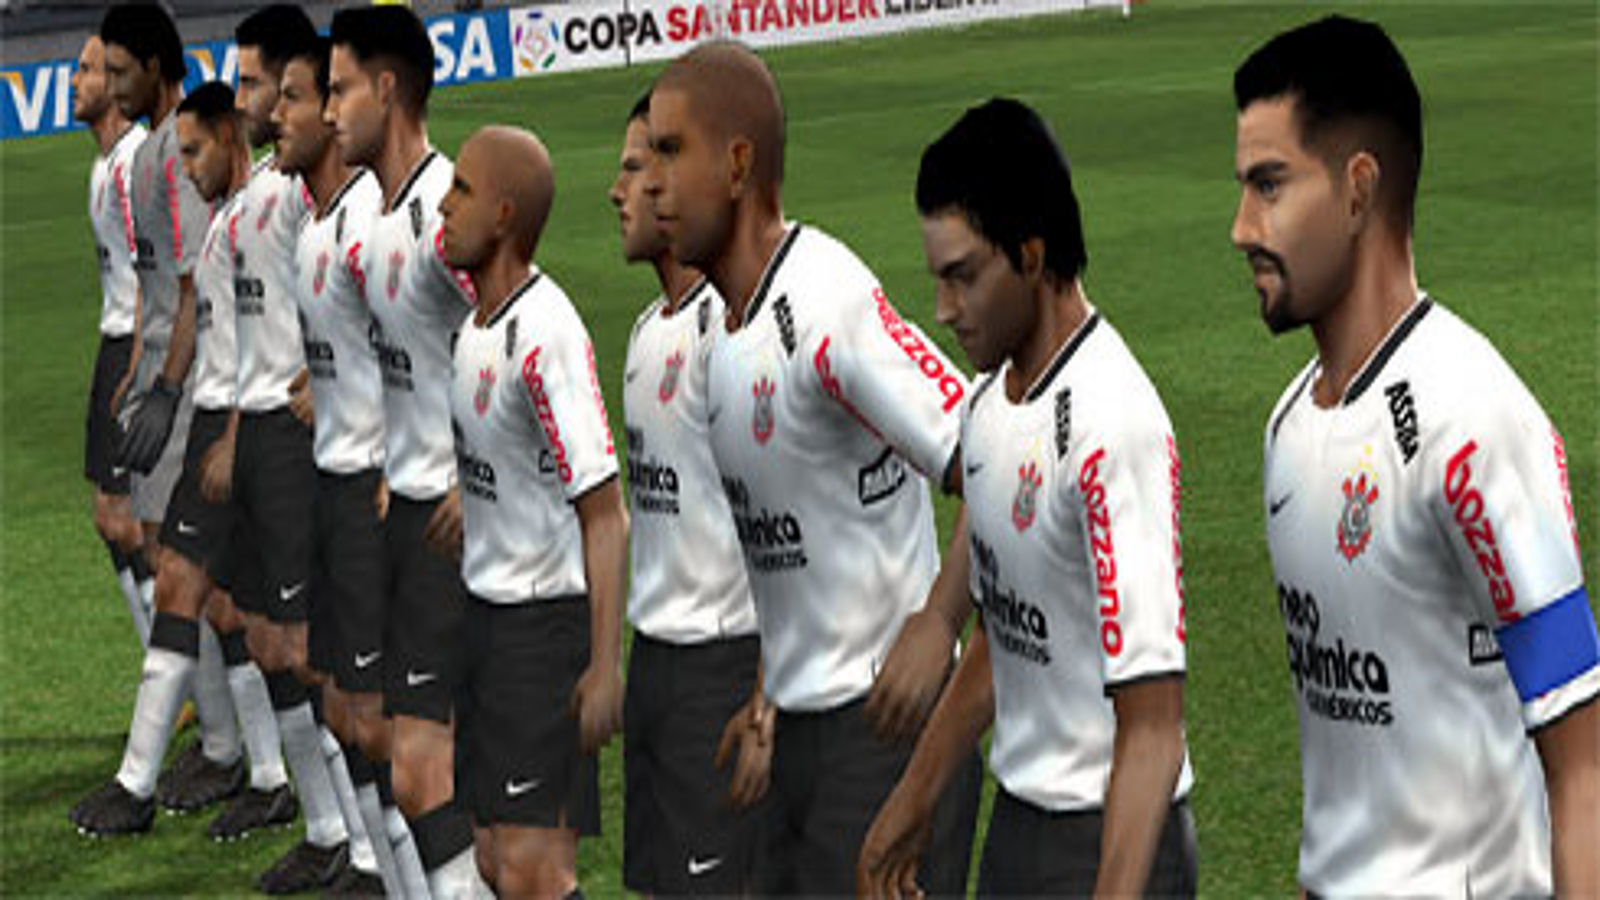 Pro Evolution Soccer 2011 - Free Download PC Game (Full Version)